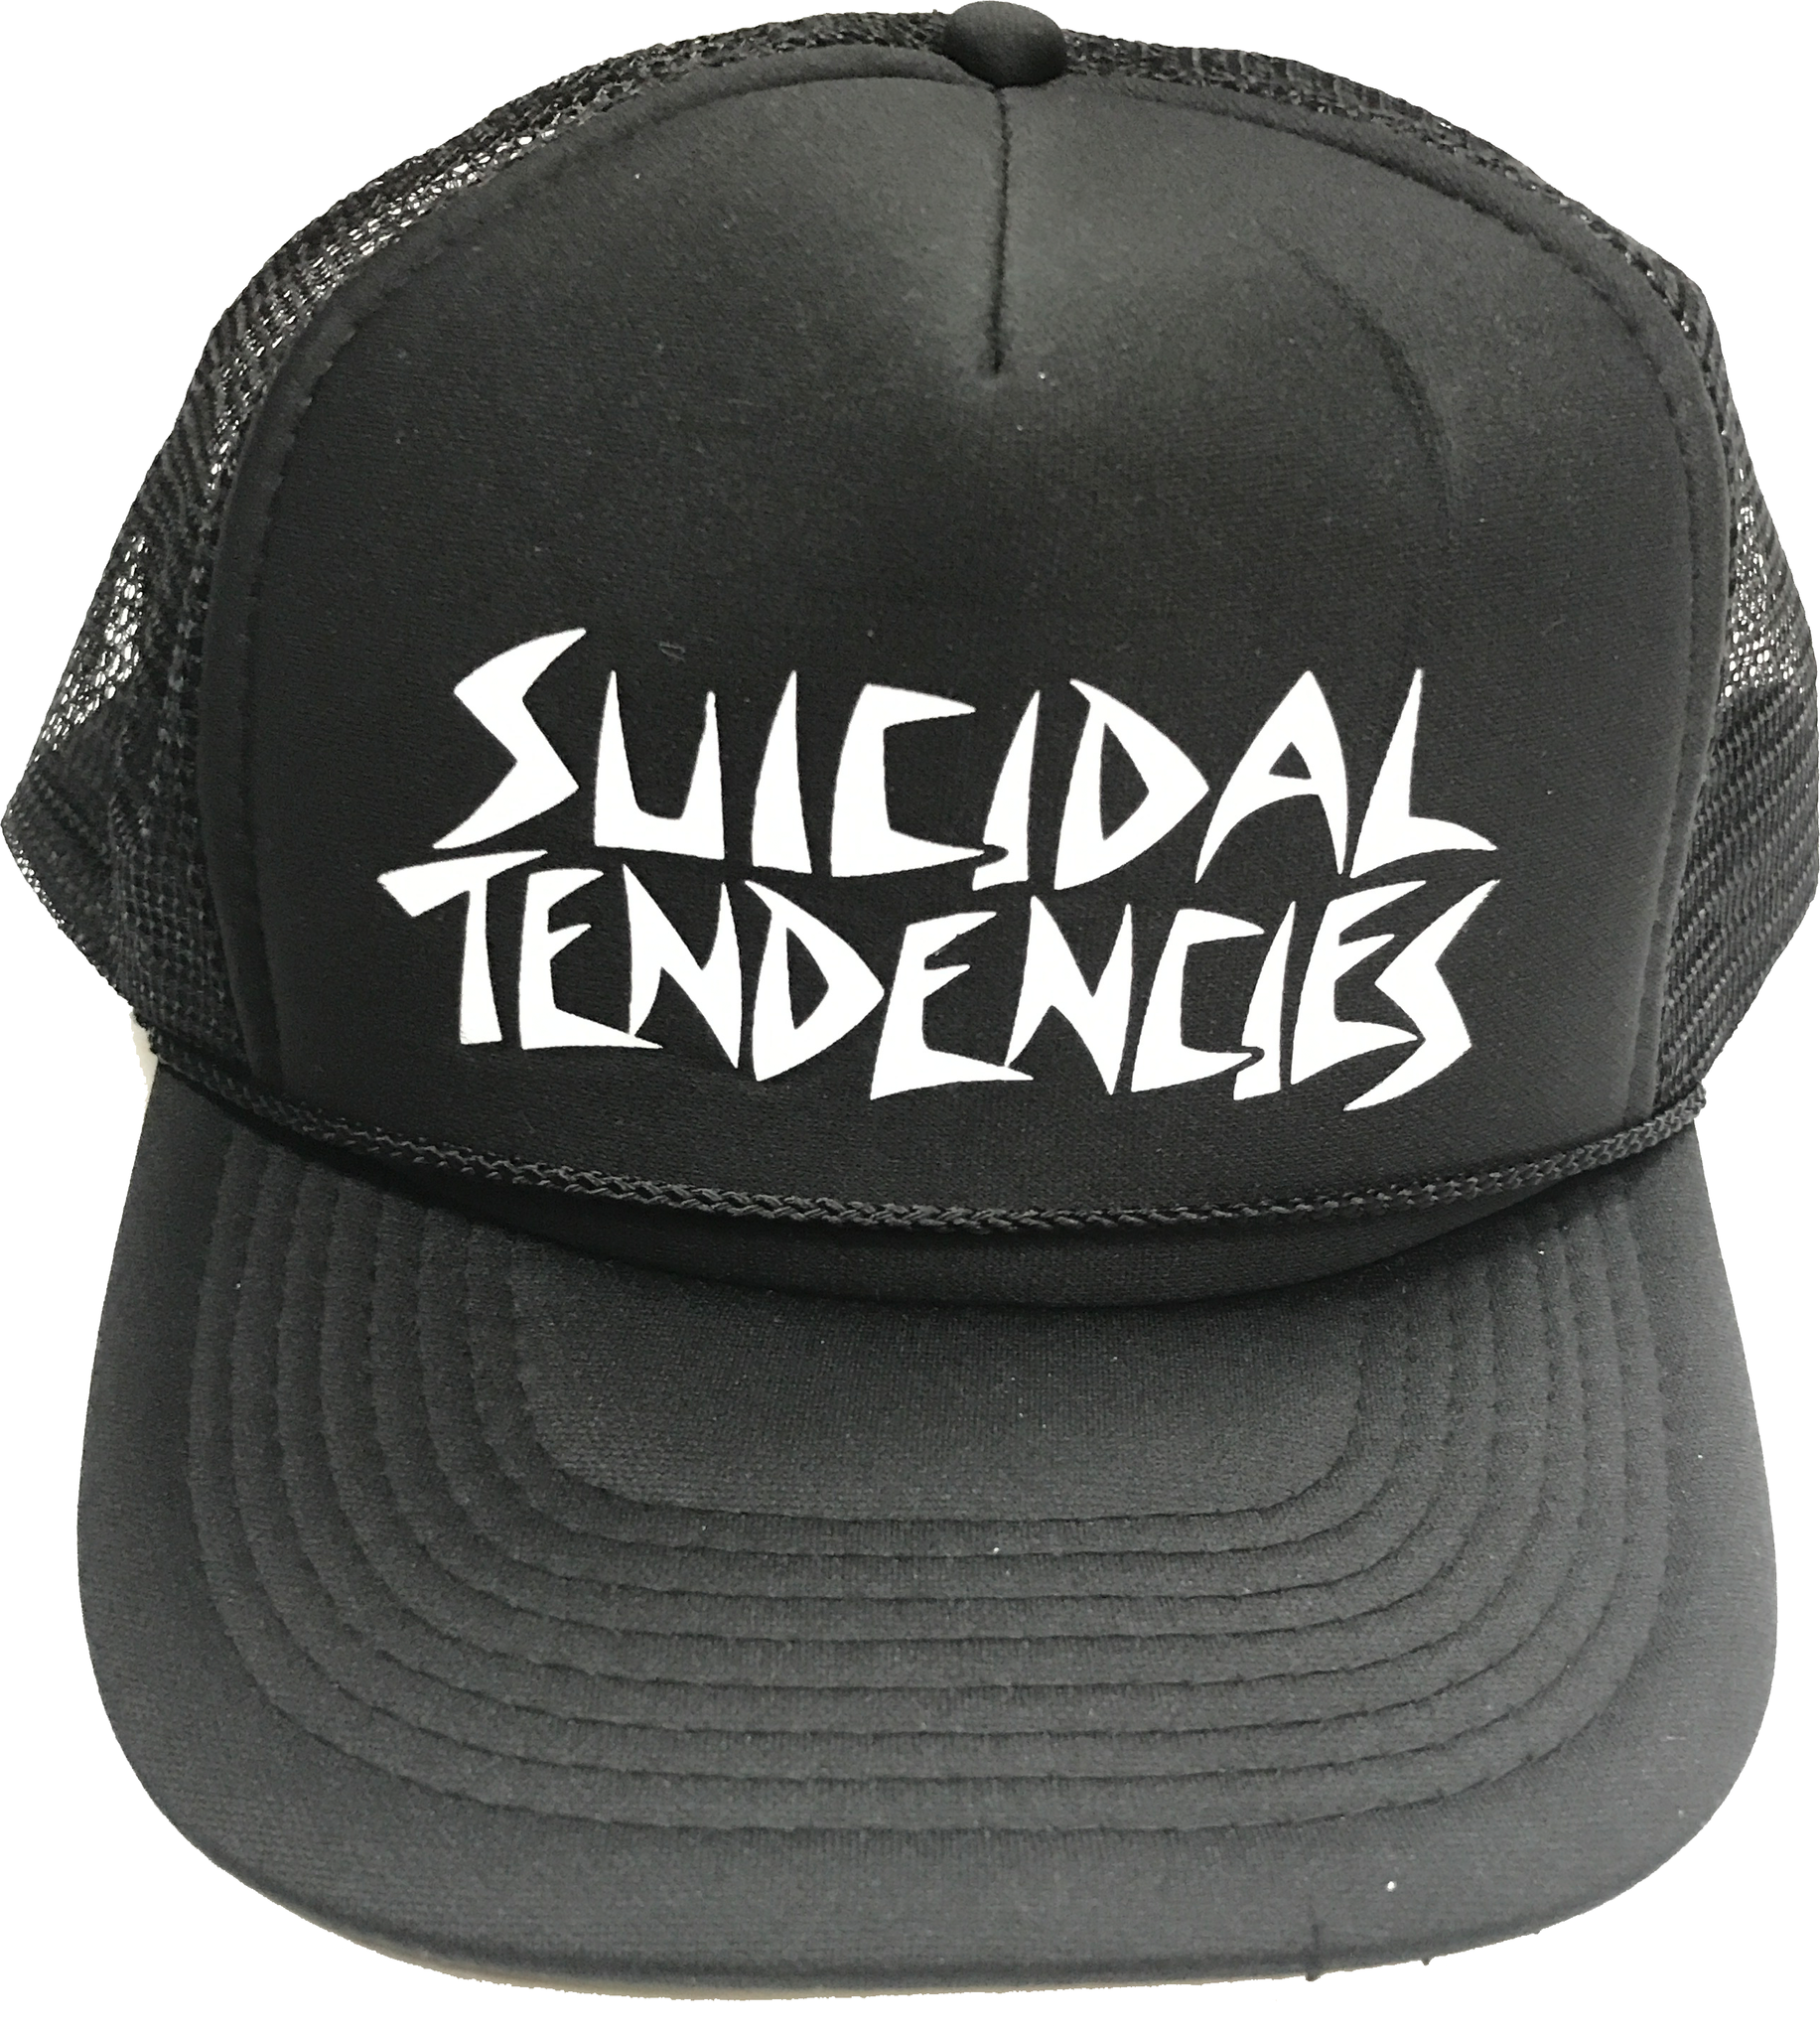 SUICIDAL TENDENCIES OG FLIP CAP